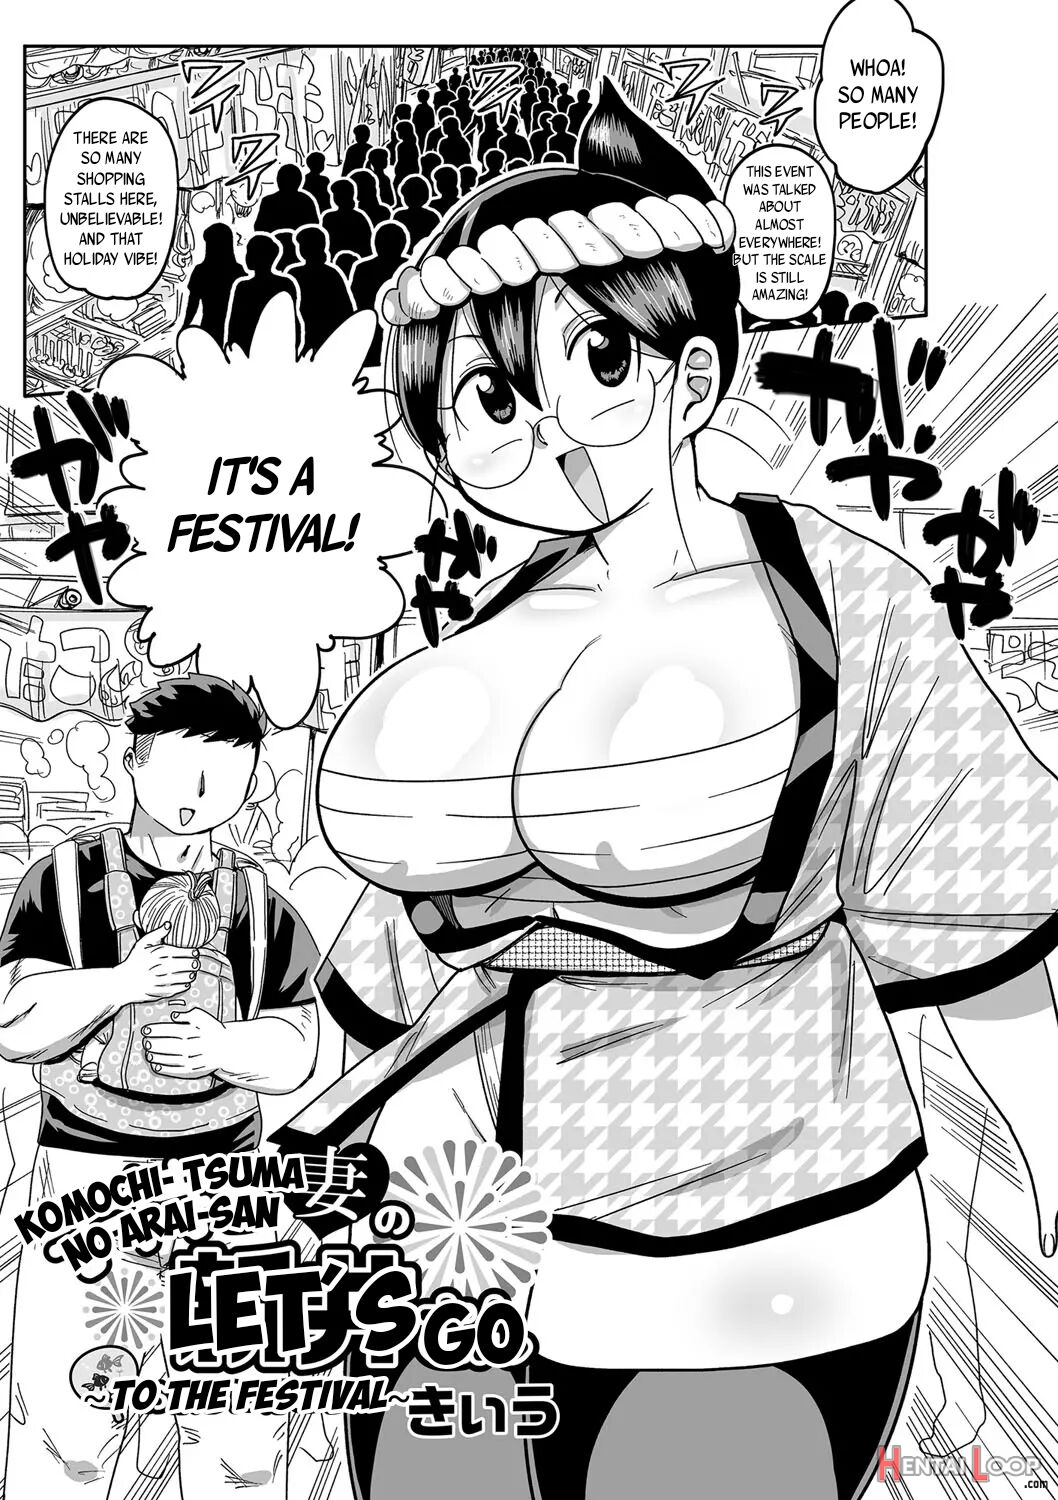 Komochi Tsuma No Arai-san: Let's Go To The Festival! page 1